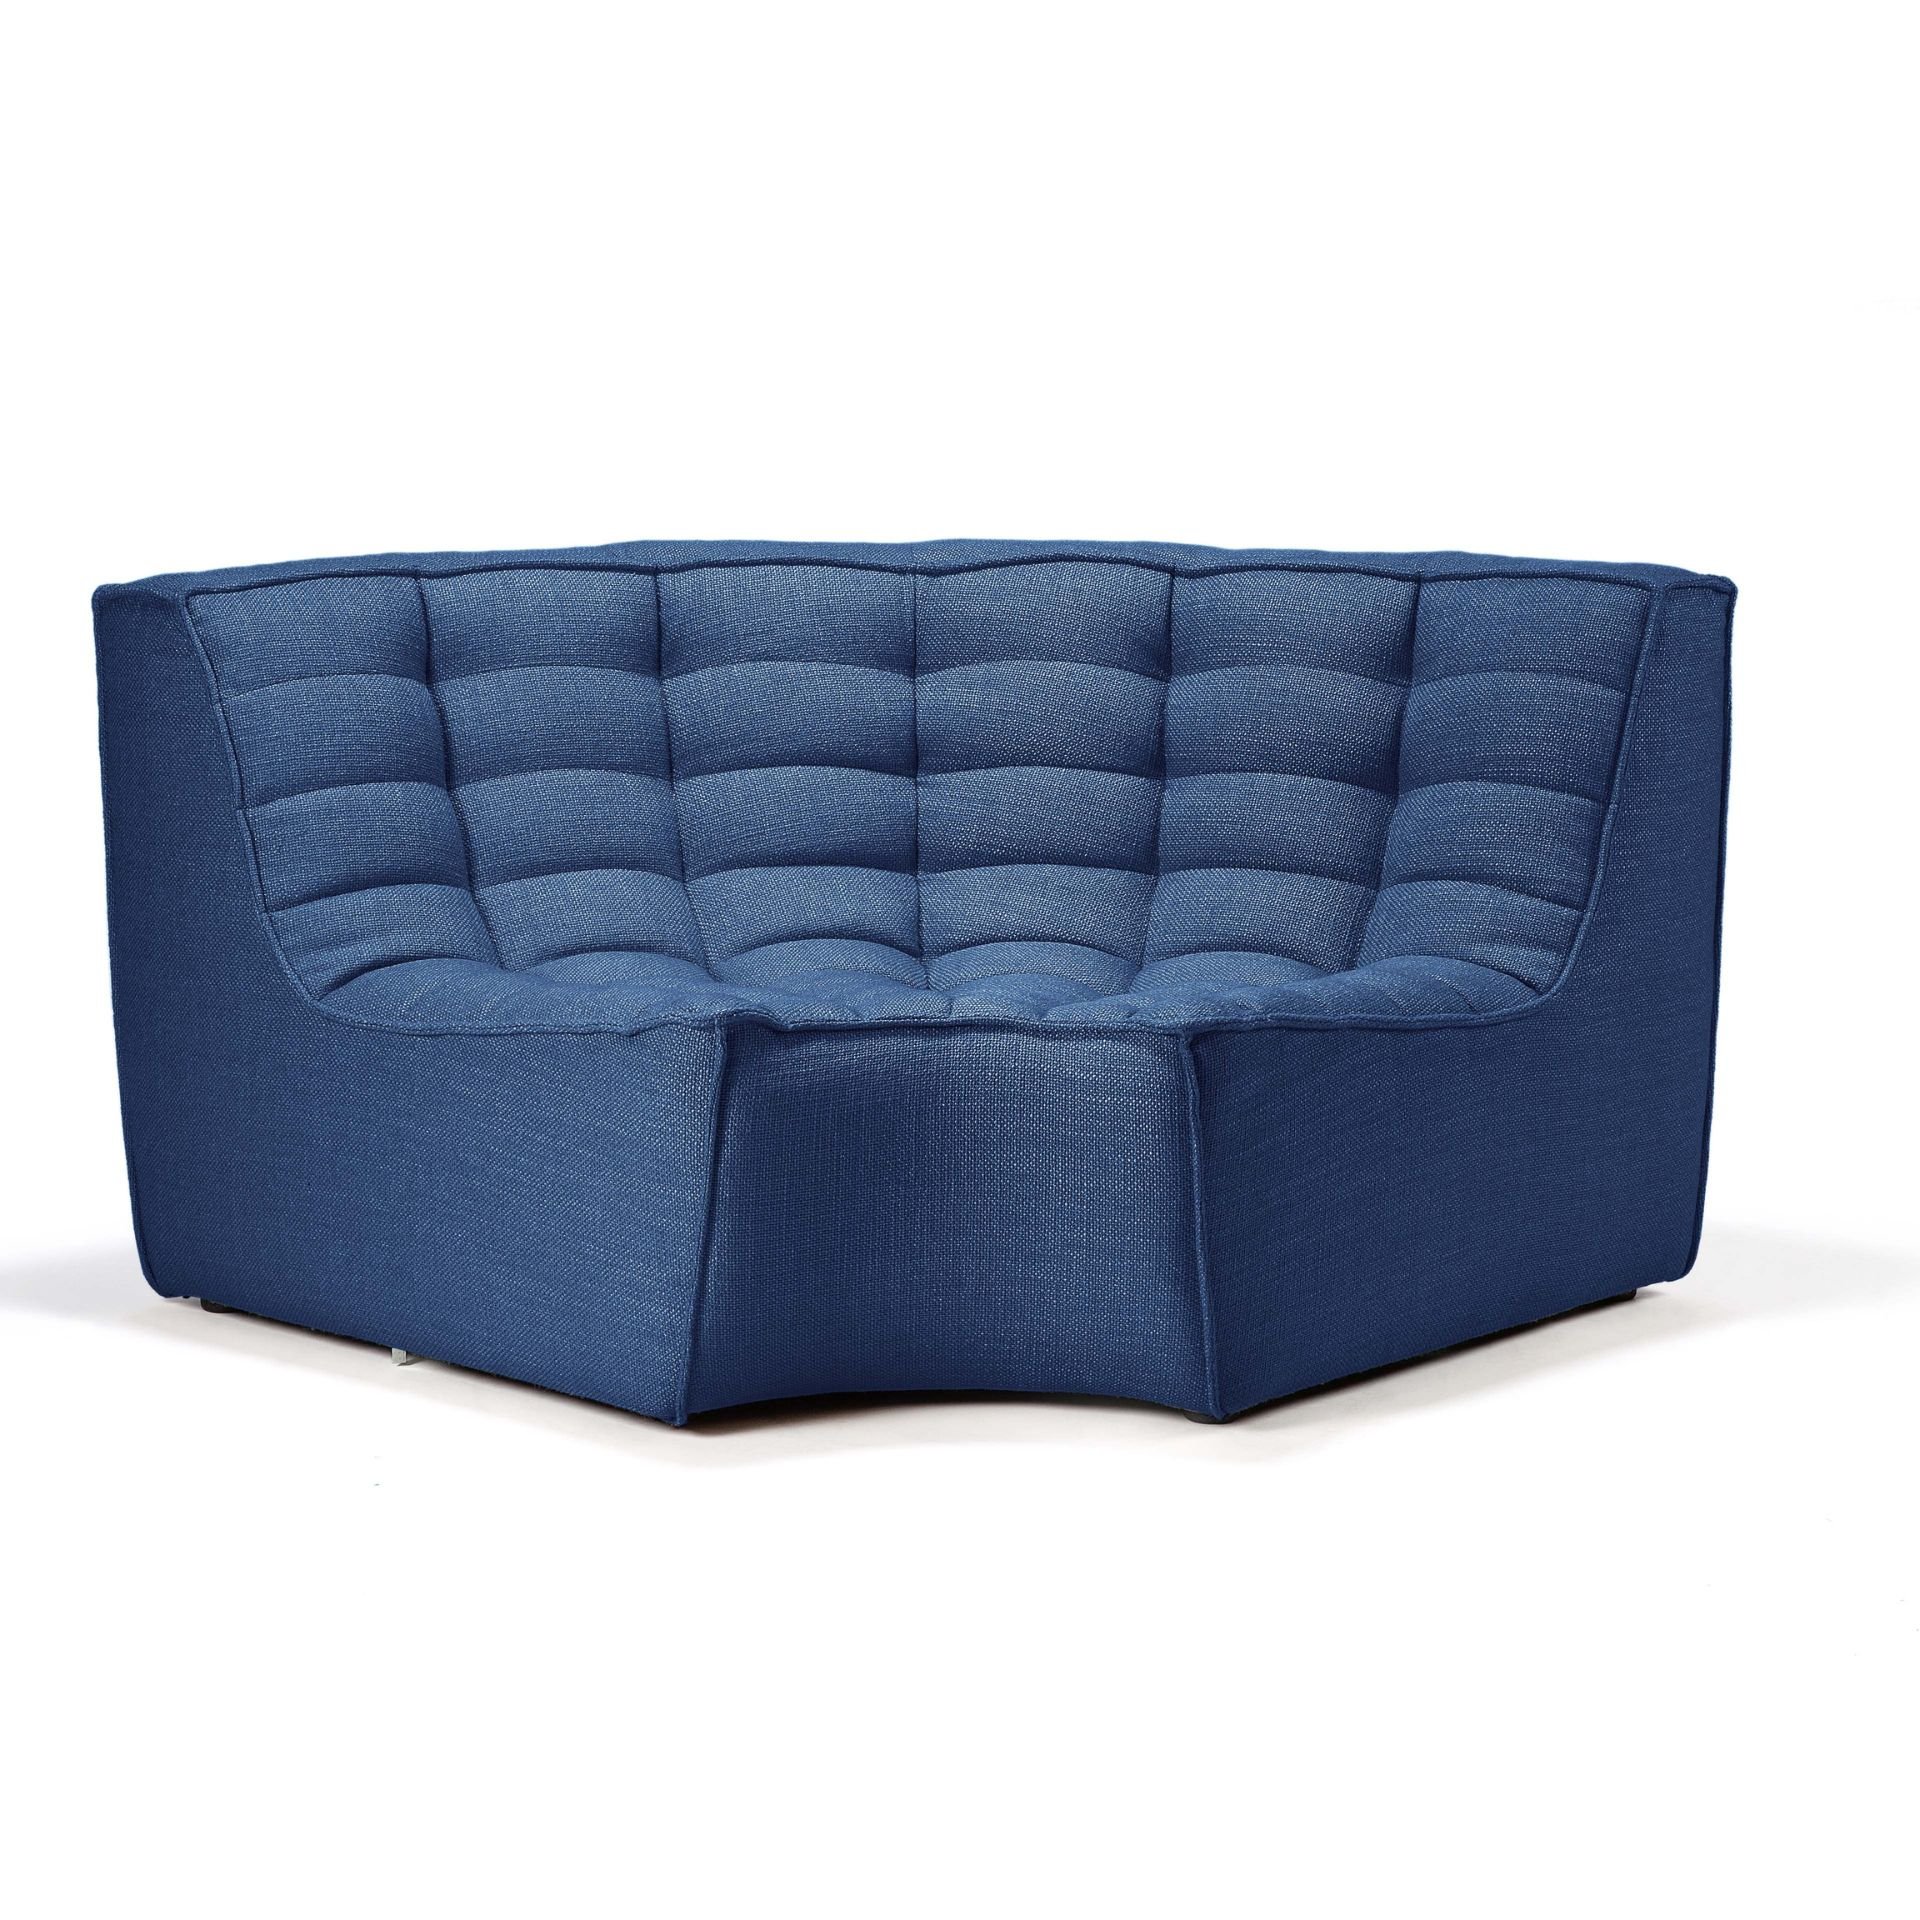 N701 sofa - round corner - blue